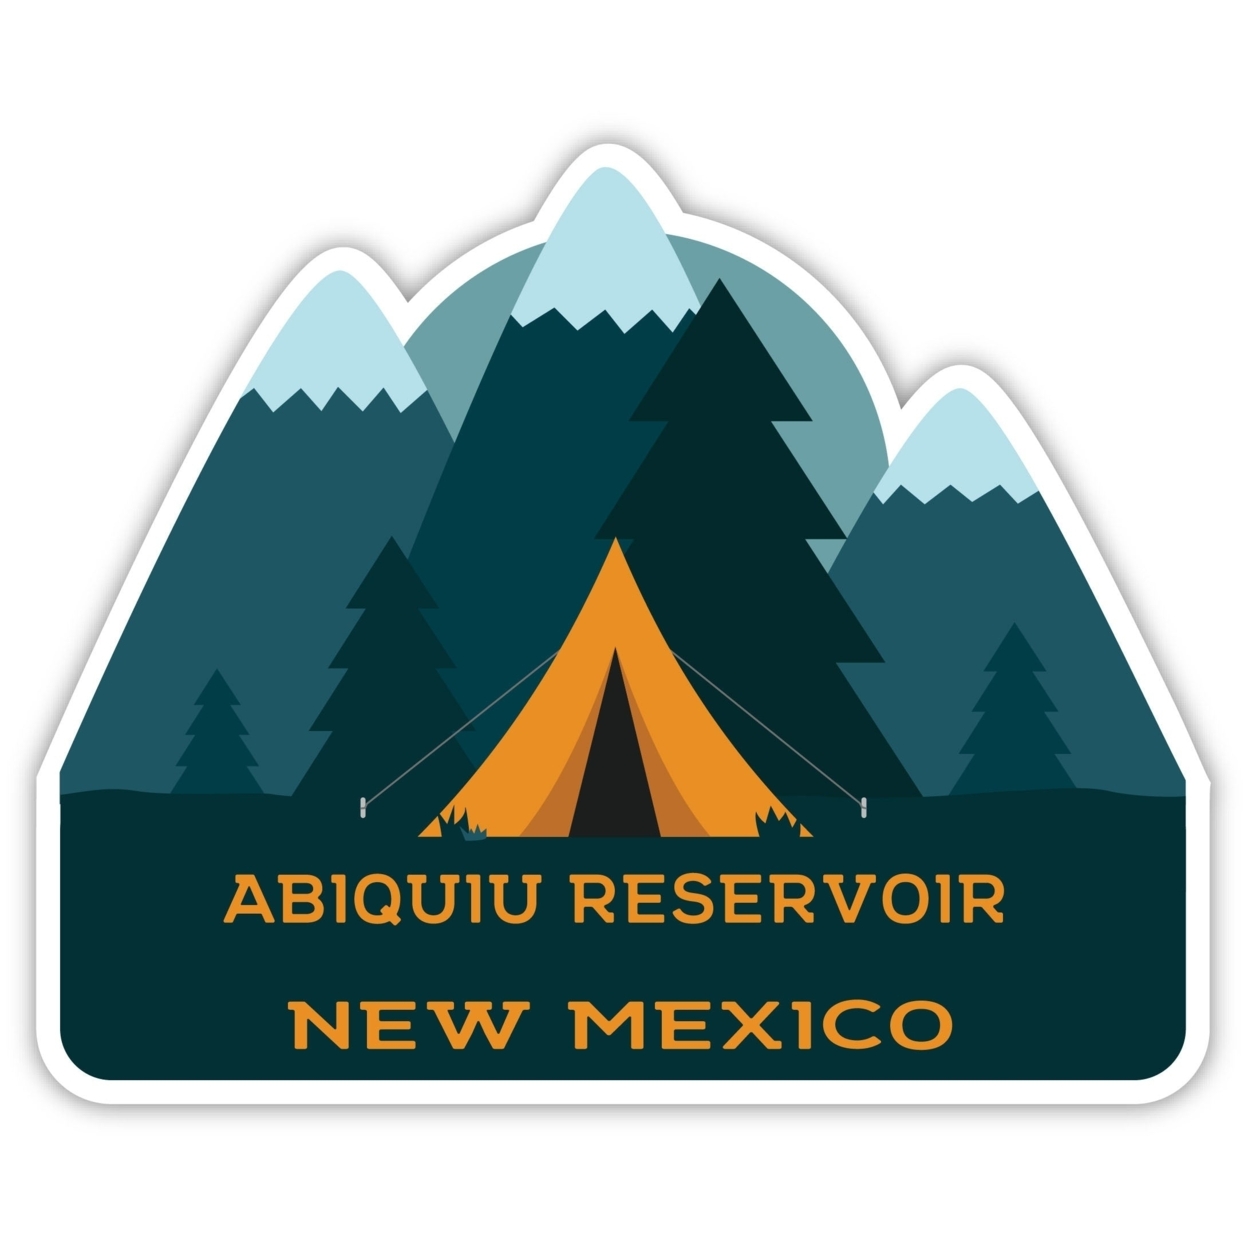 Abiquiu Reservoir New Mexico Souvenir Decorative Stickers (Choose Theme And Size) - 4-Pack, 6-Inch, Tent